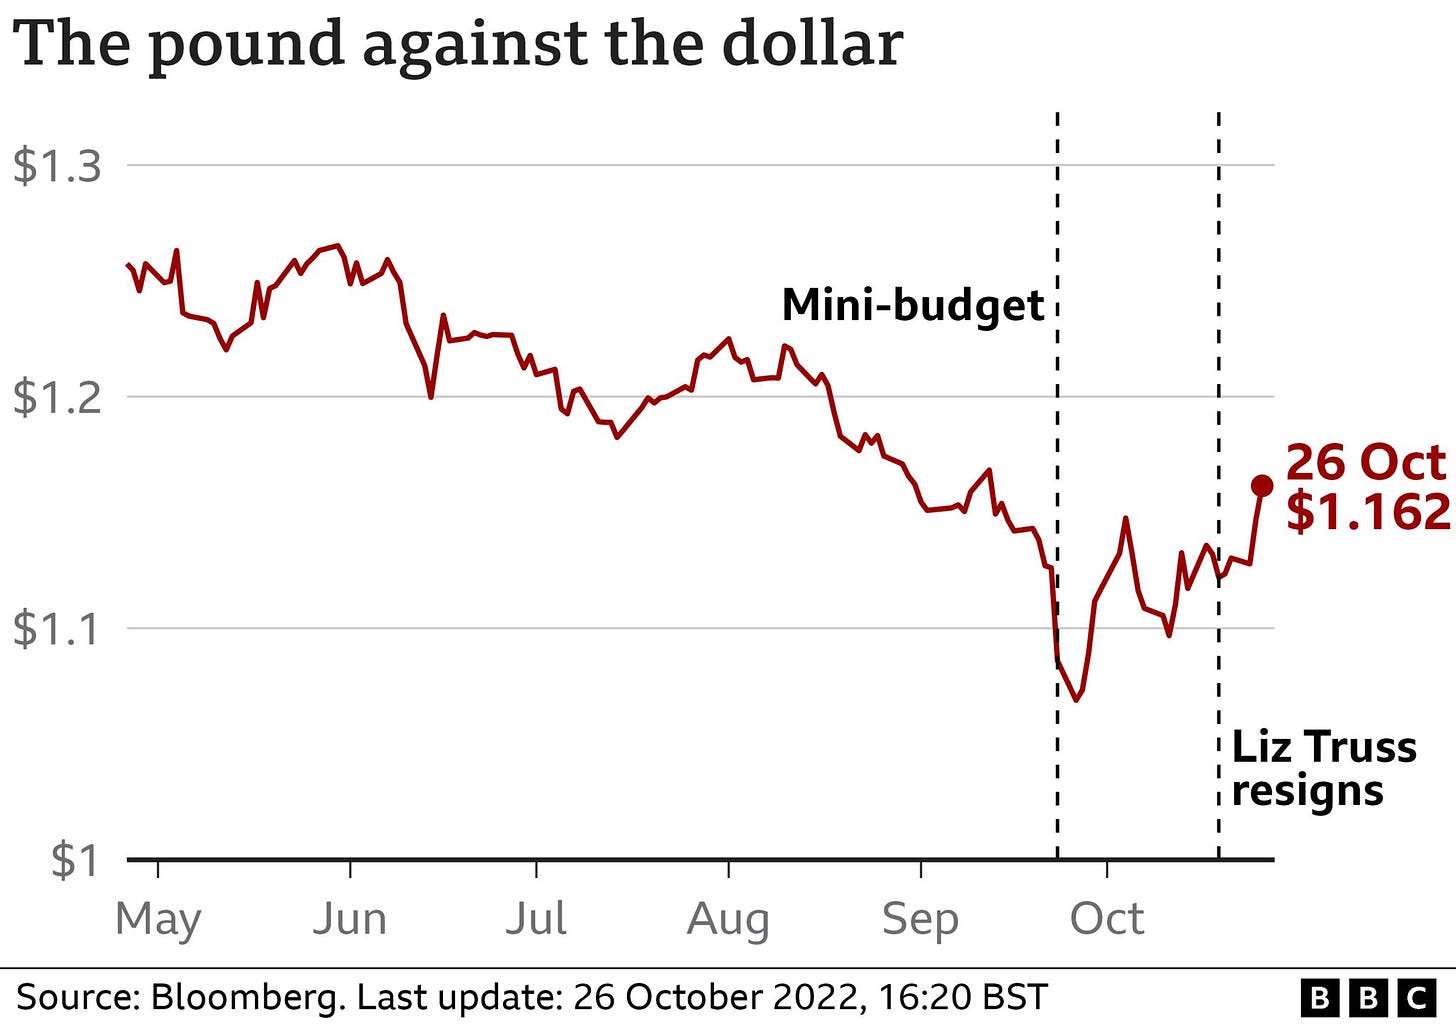 Pound rises after delay to economic plan - BBC News